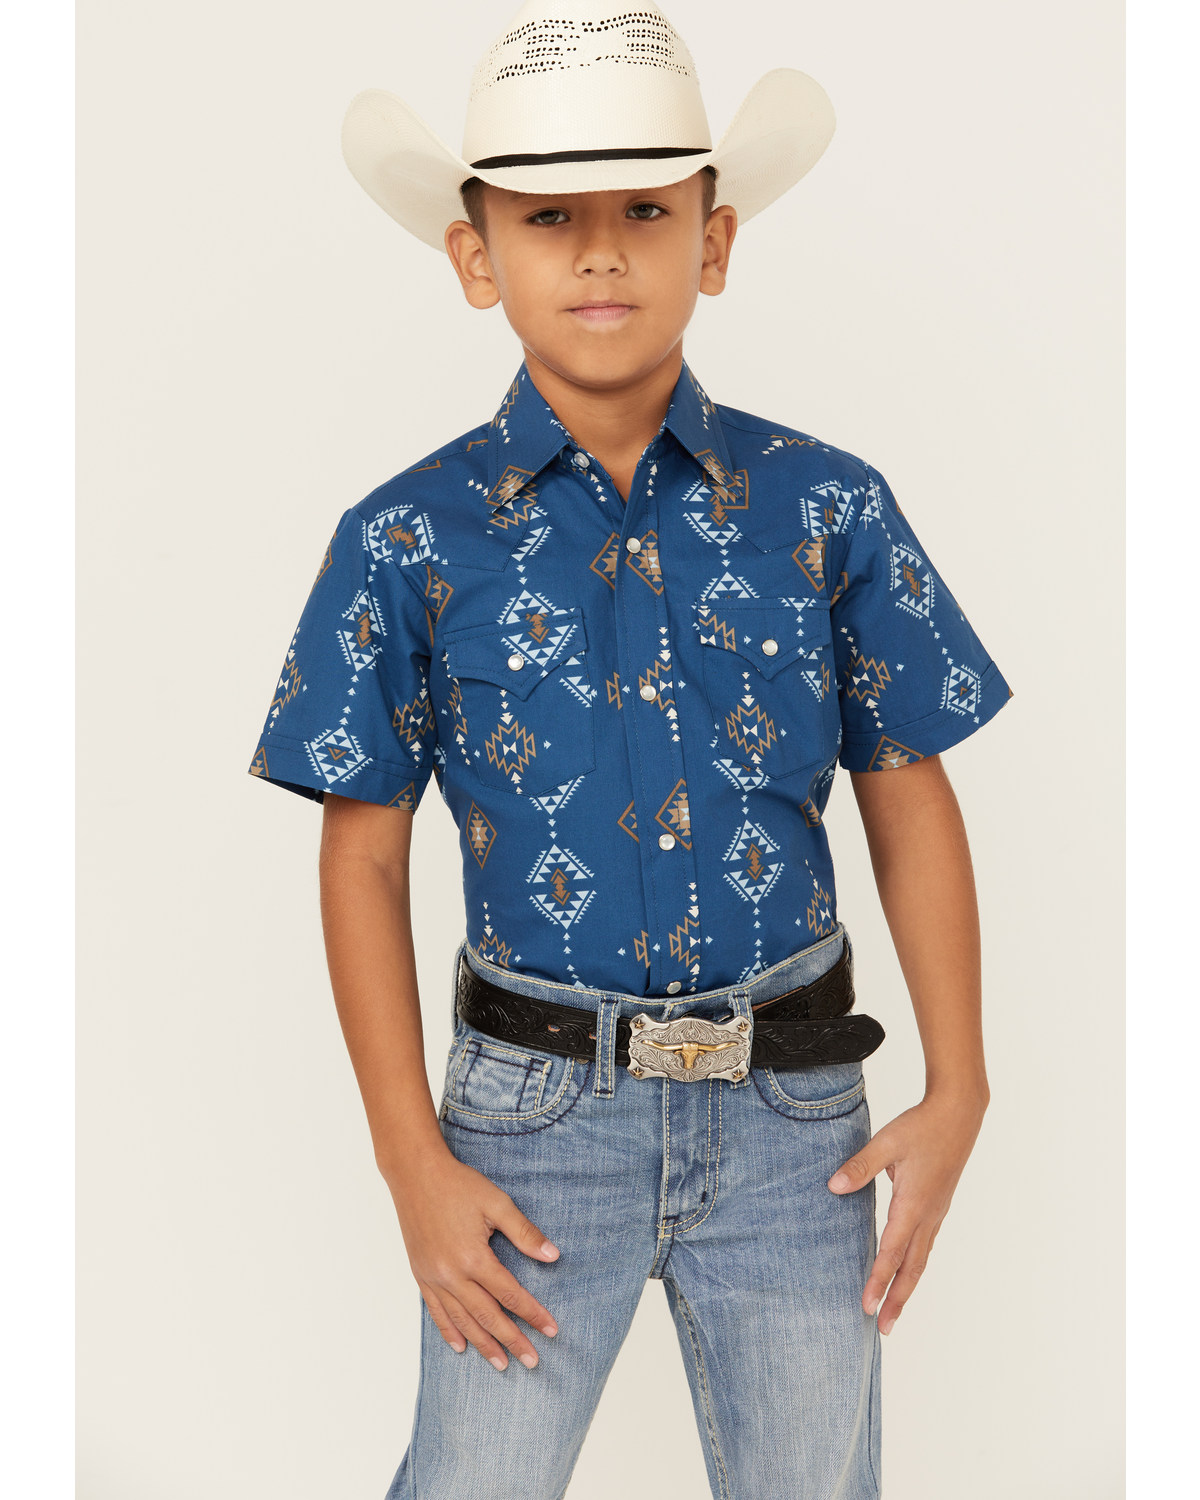 Ely Walker Boys' Southwestern Print Short Sleeve Pearl Snap Western Shirt